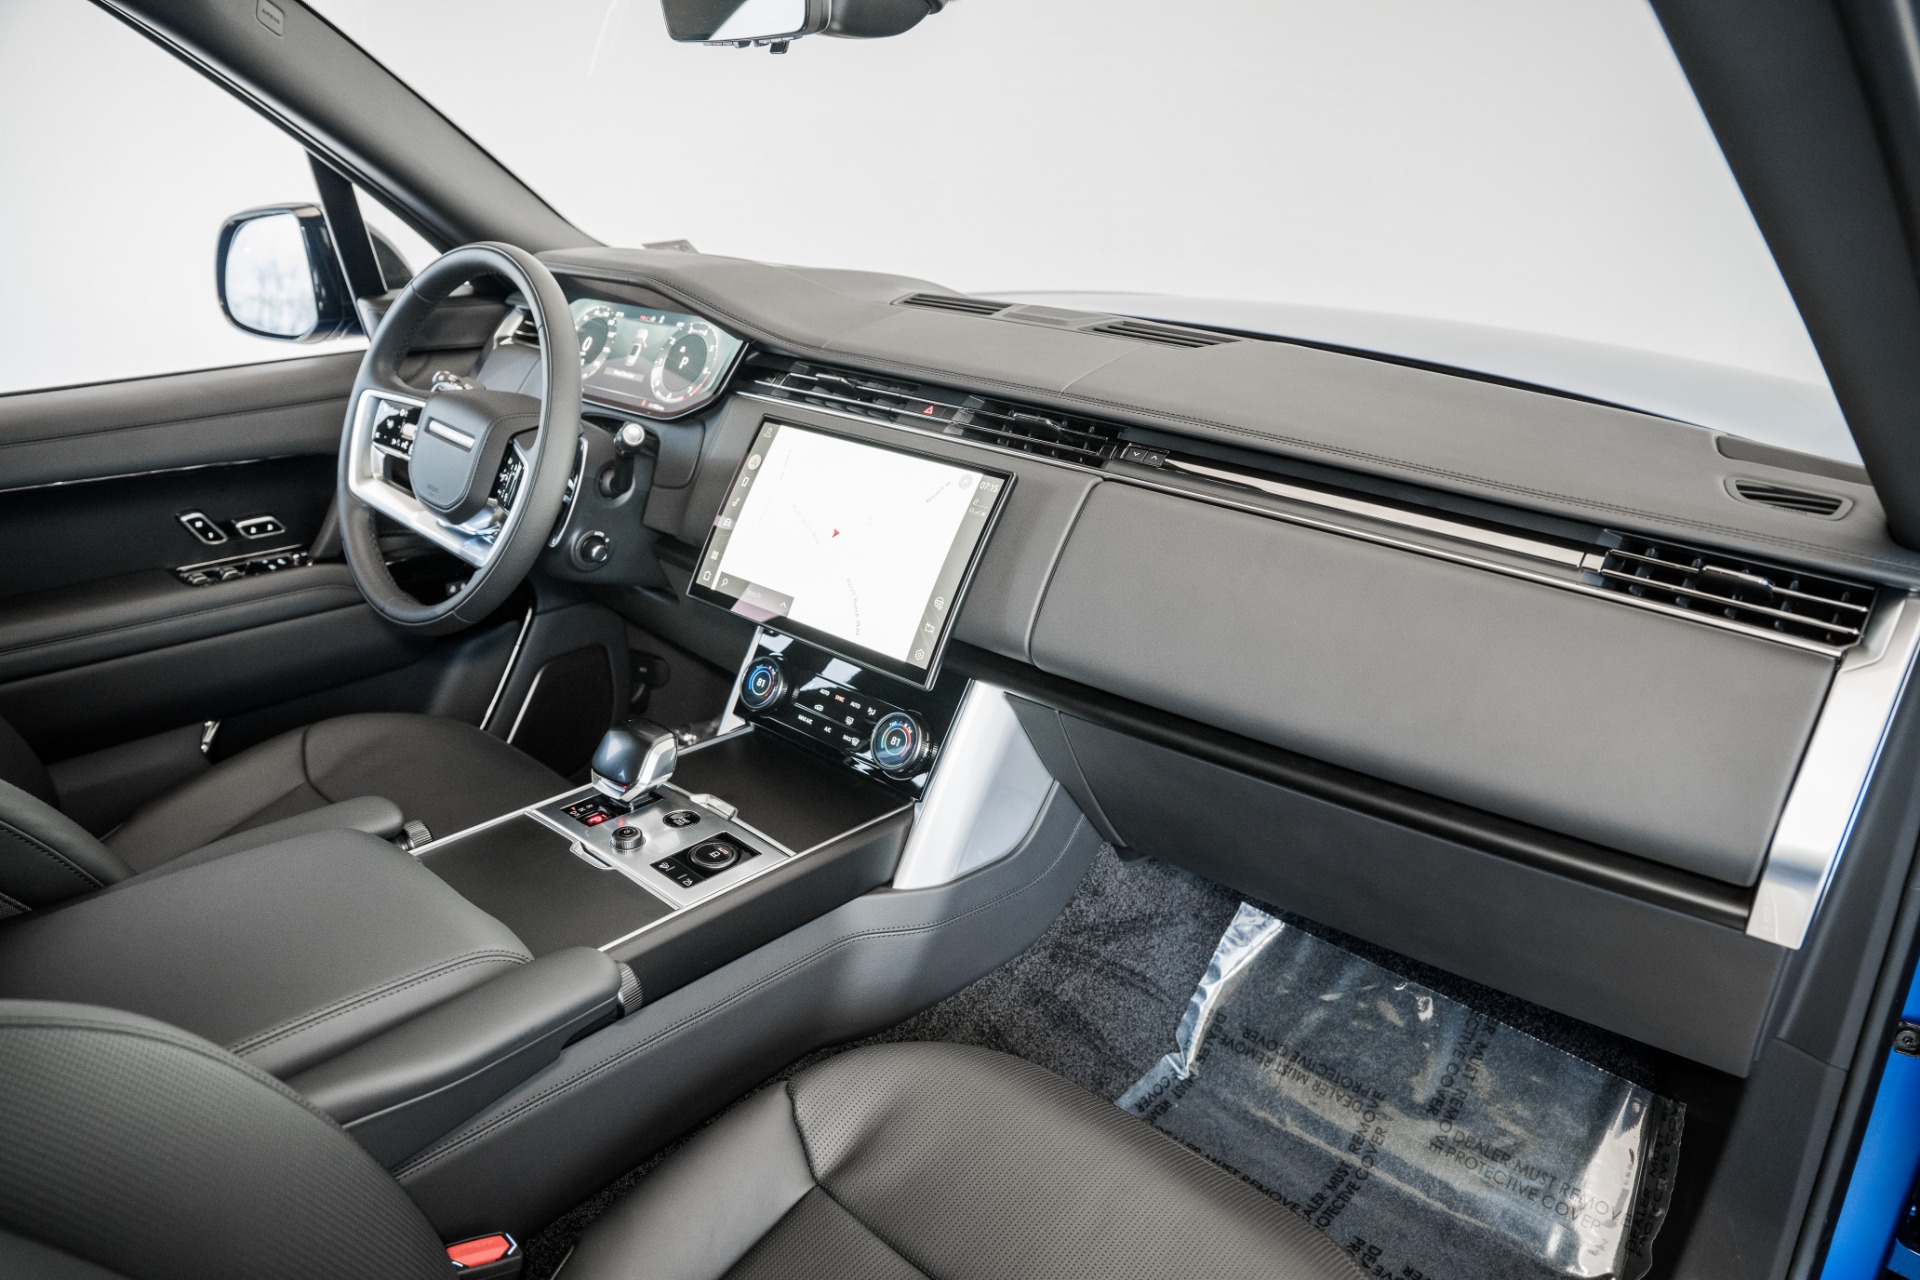 RENAULT CLIO 5 (2019) - Interior and Exterior Walkaround 